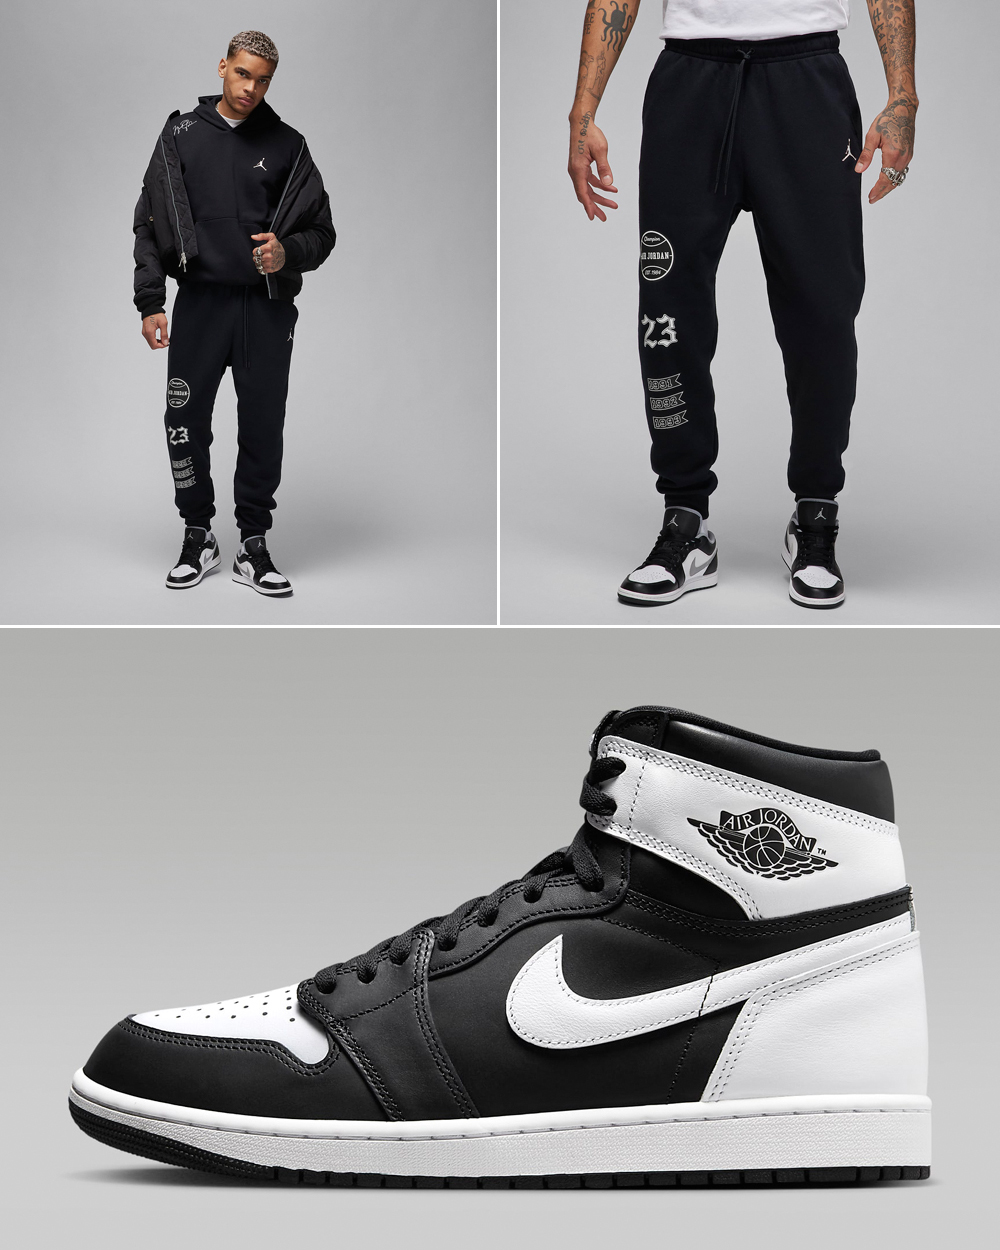 Air-Jordan-1-Retro-High-OG-Black-White-Hoodie-Pants-Matching-Outfit